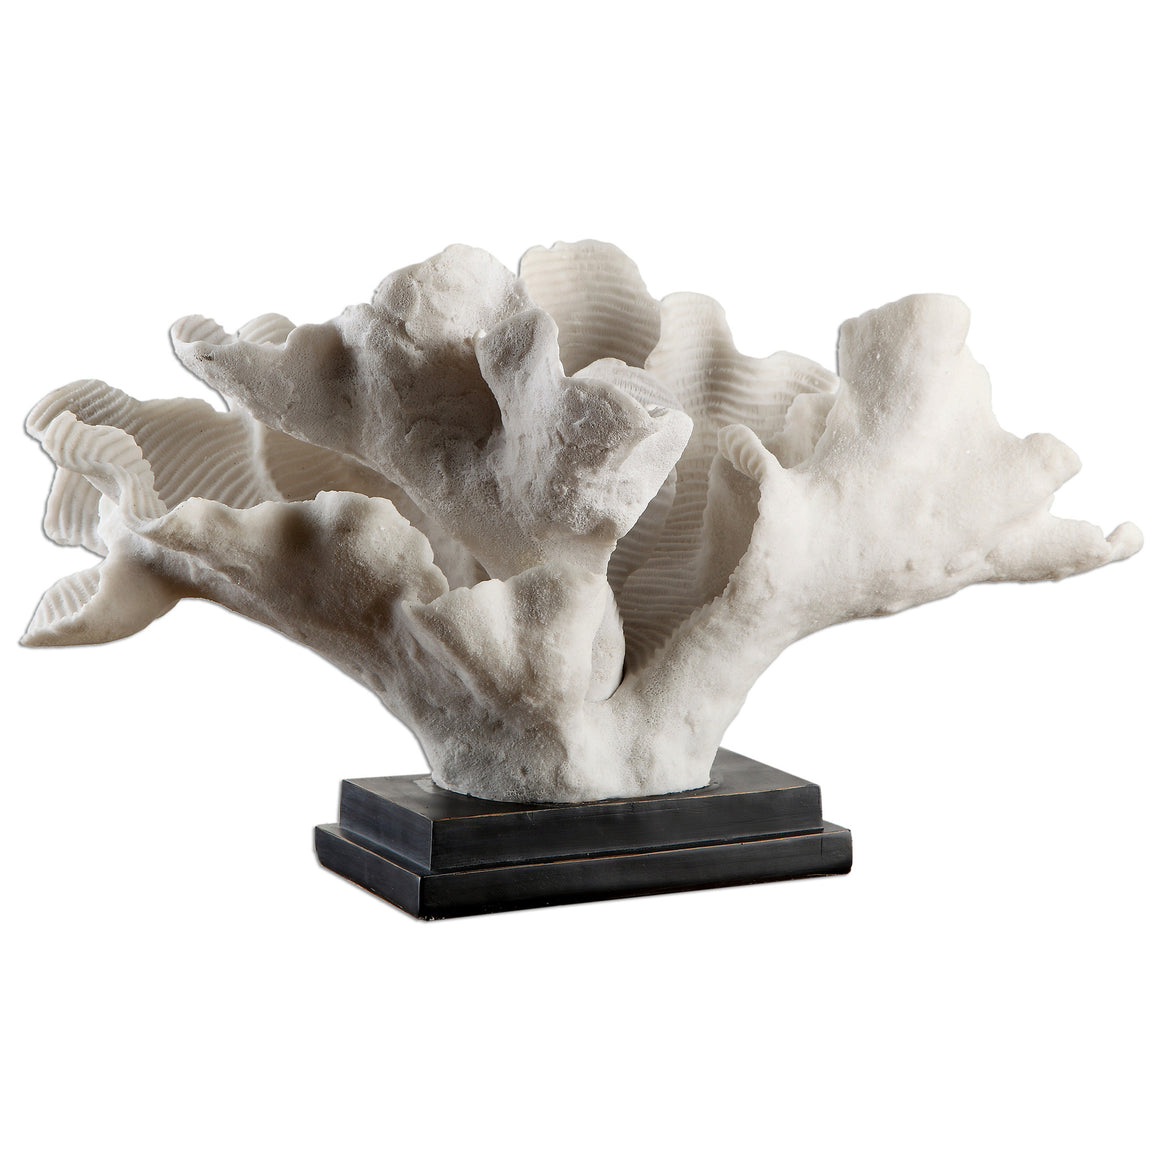 Decor - Coral Sculpture